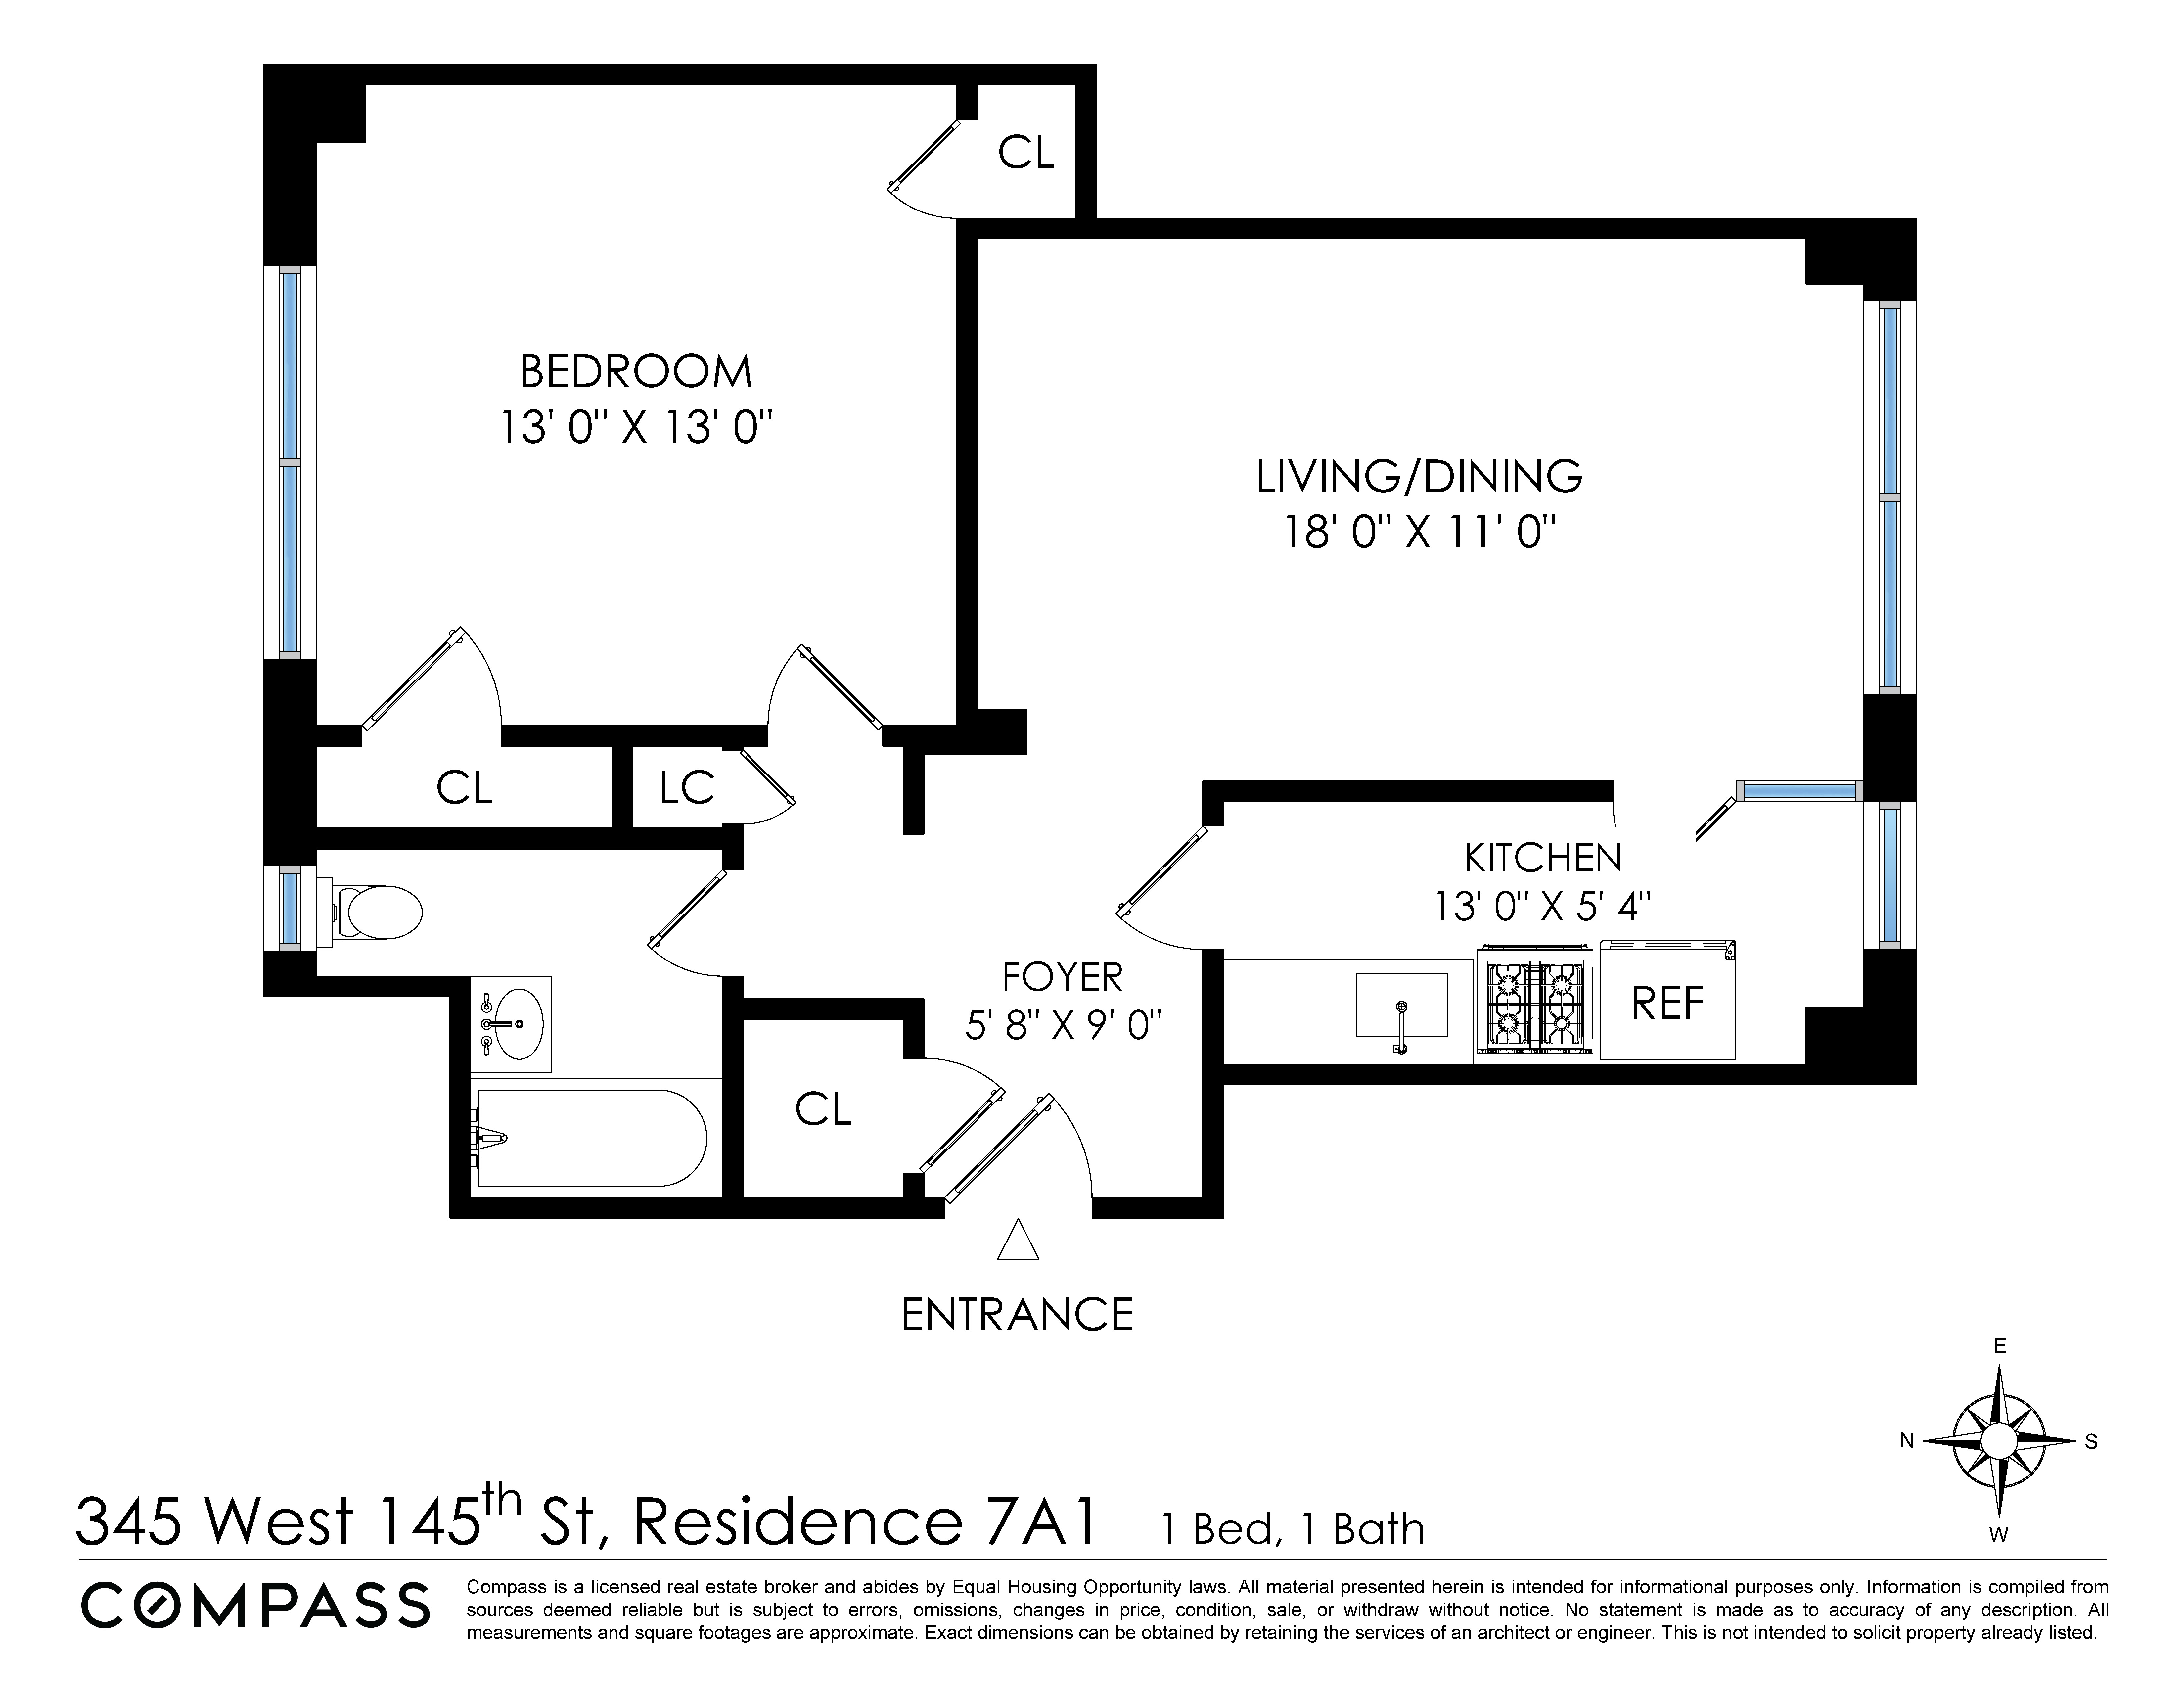 Floorplan for 345 West 145th Street, 7A1